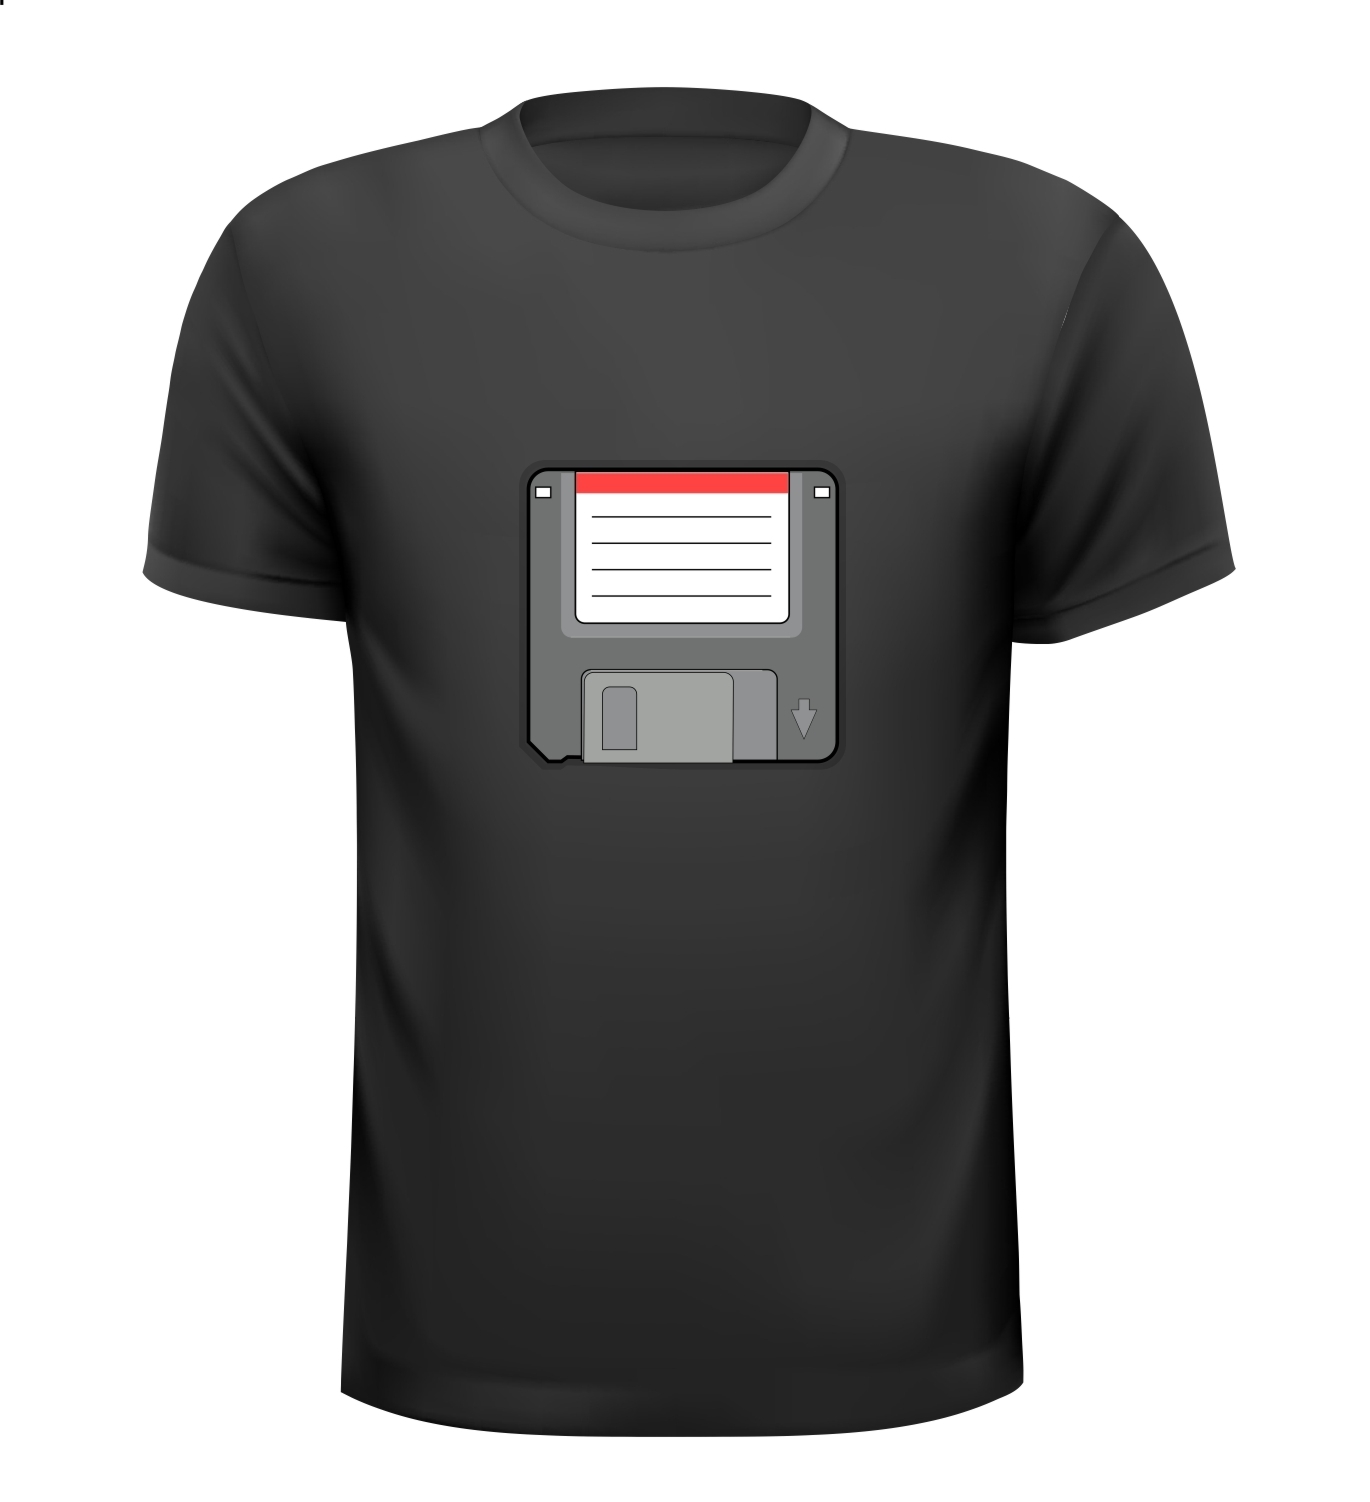 Floppy disk shirt